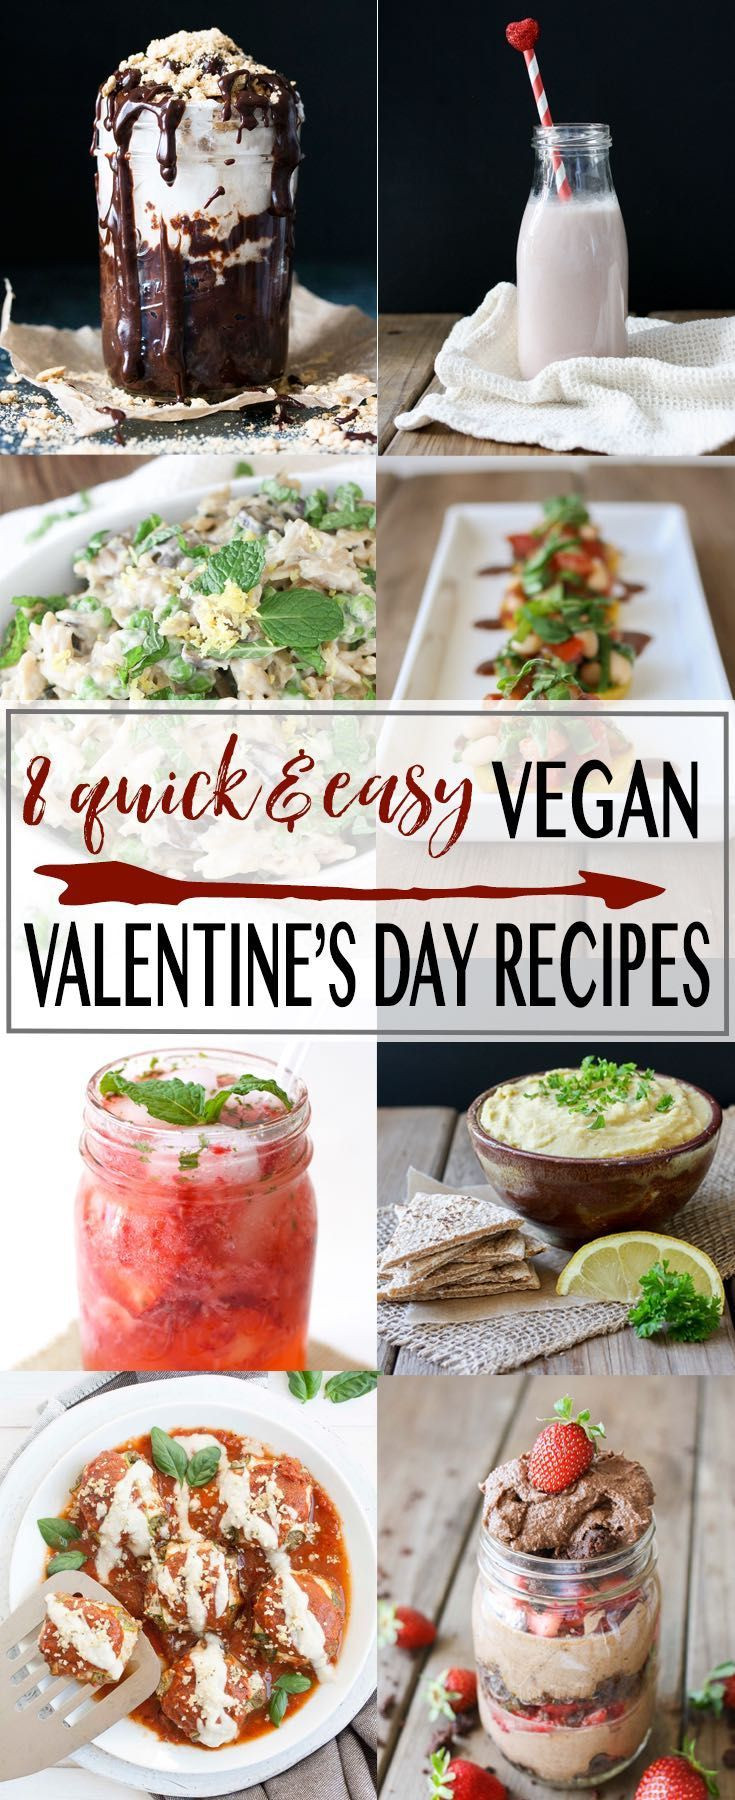 Vegan Valentine Recipes
 8 Quick and Easy Vegan Valentine s Day Recipes